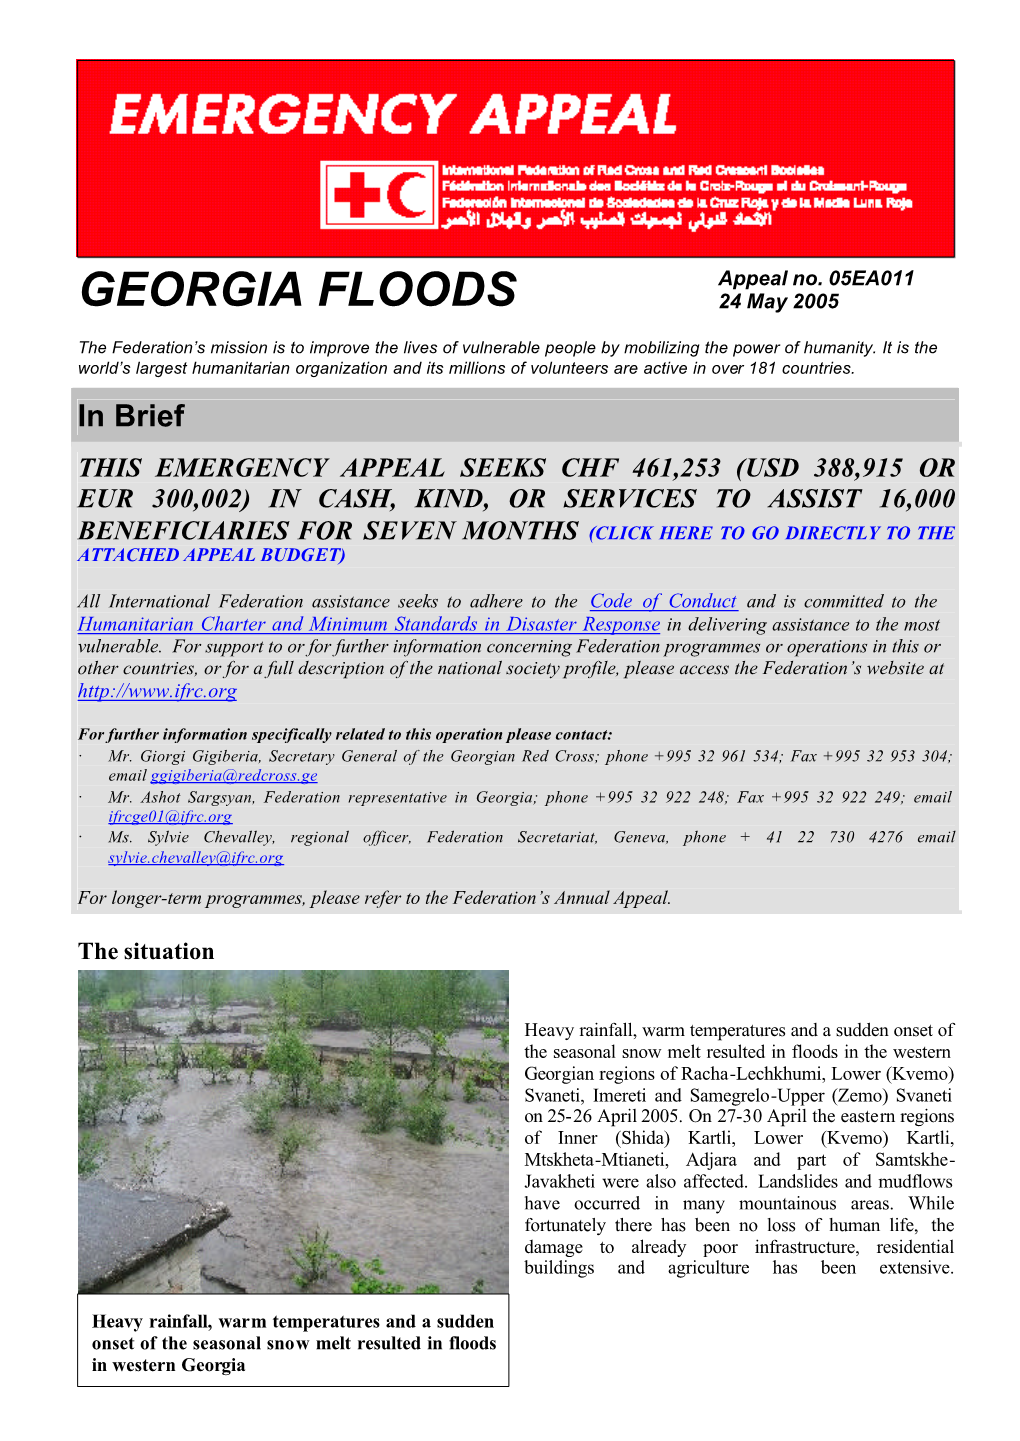 IFRC- Georgia Floods Emergency Appeal (Appeal No.05EA011) (24